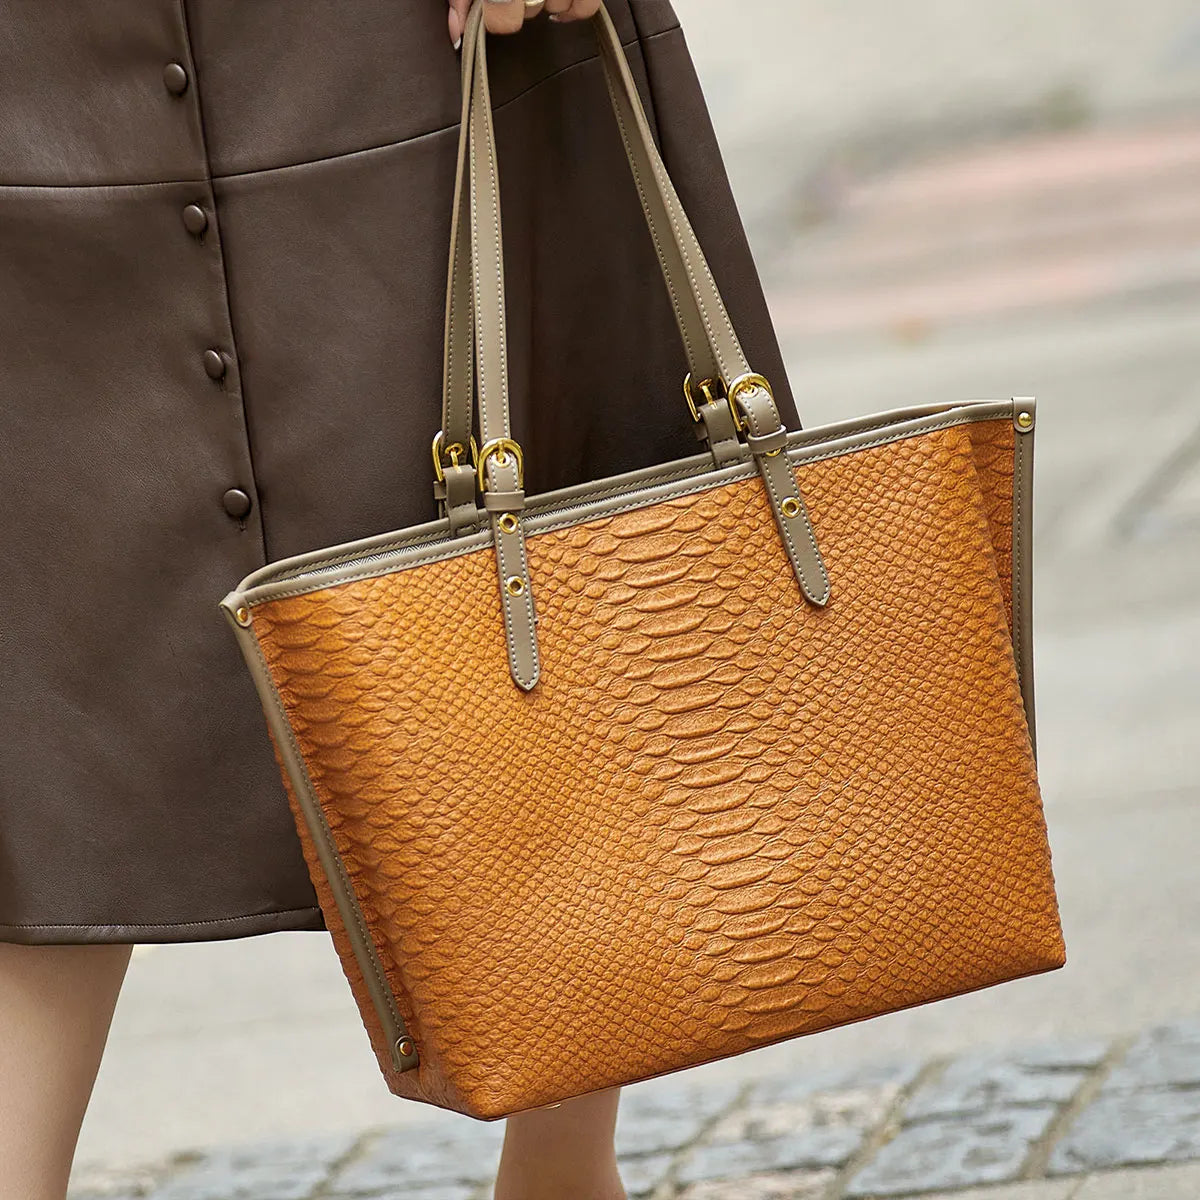 KIMLUD, ZOOLER New Genuine Leather Women Shoulder Bag First LayerTote Original Design Serpentine Pattern Large Handbag Solid Big#BY213, Orange, KIMLUD Women's Clothes